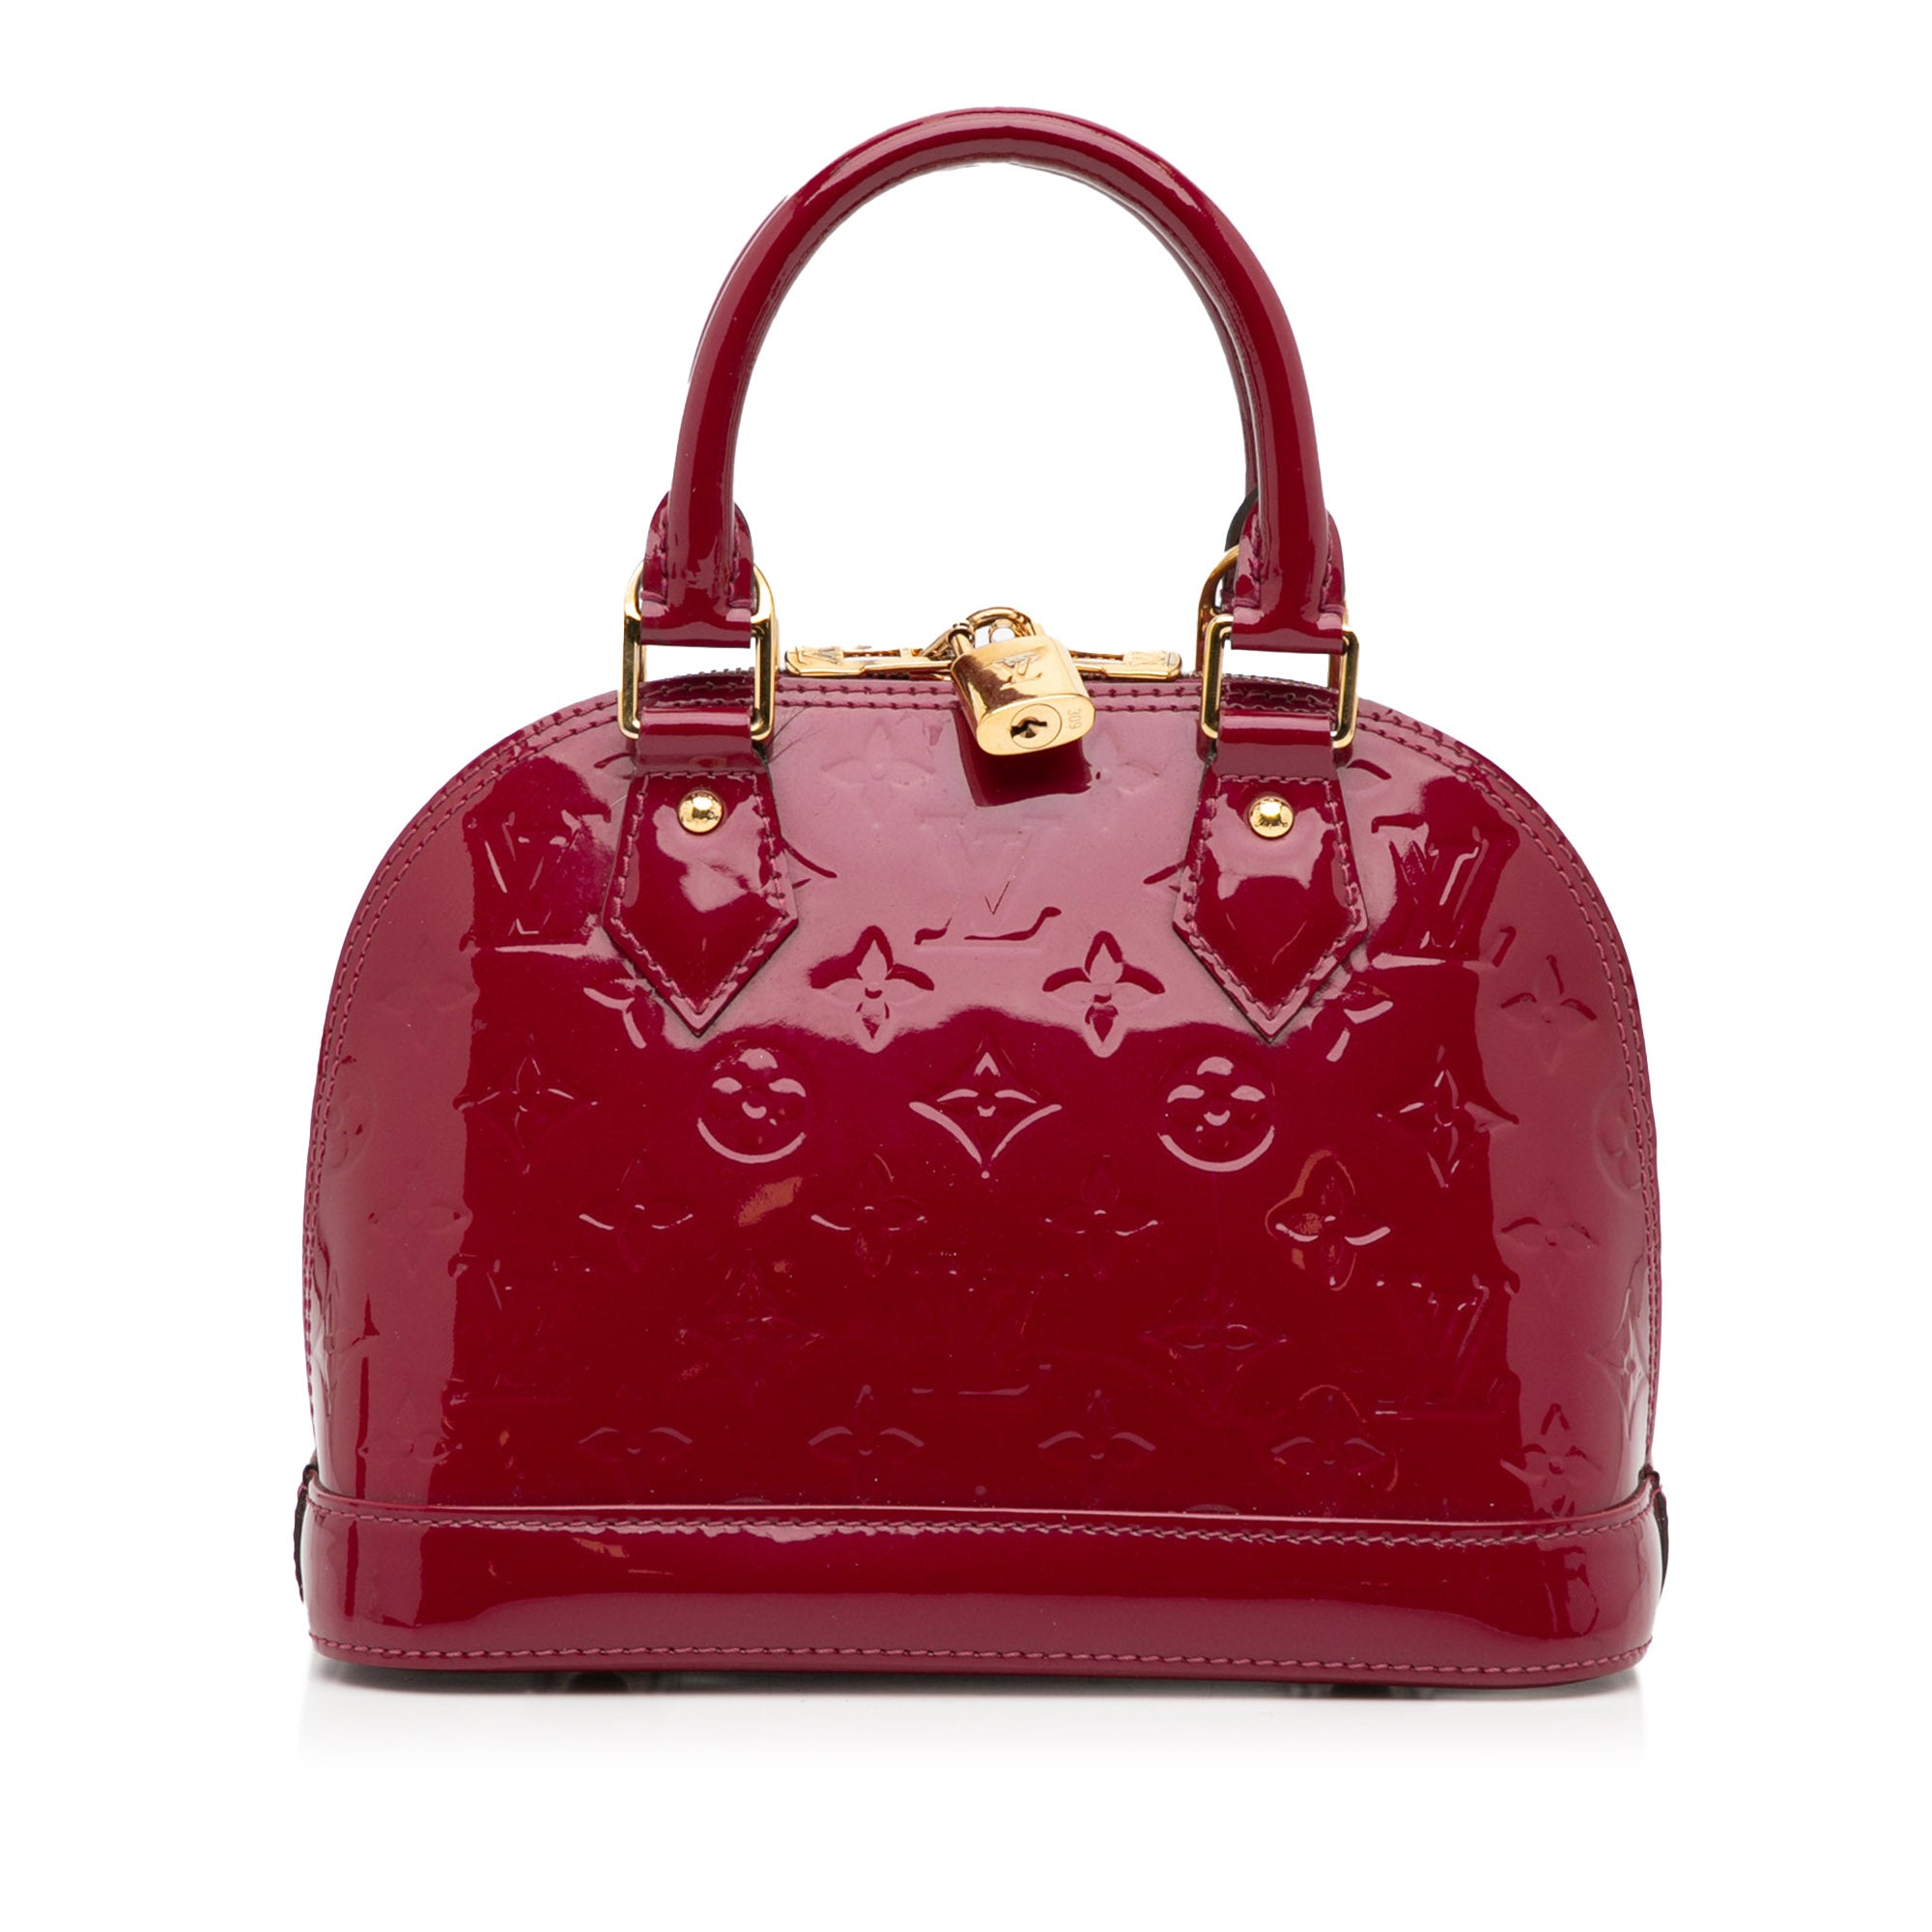 louis vuitton red leather handbag